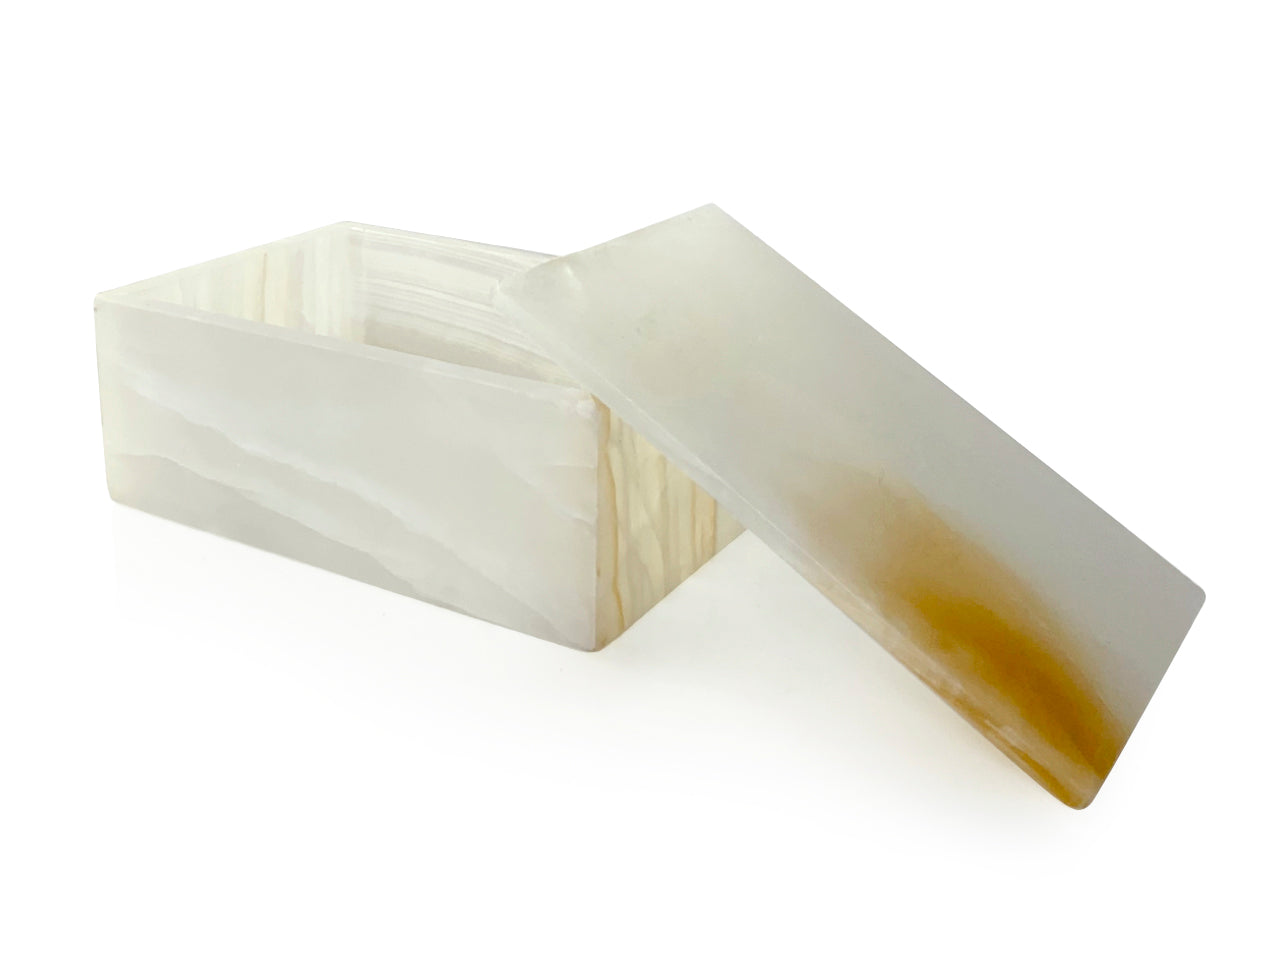 White onyx prism jewelry box 8 cm tall